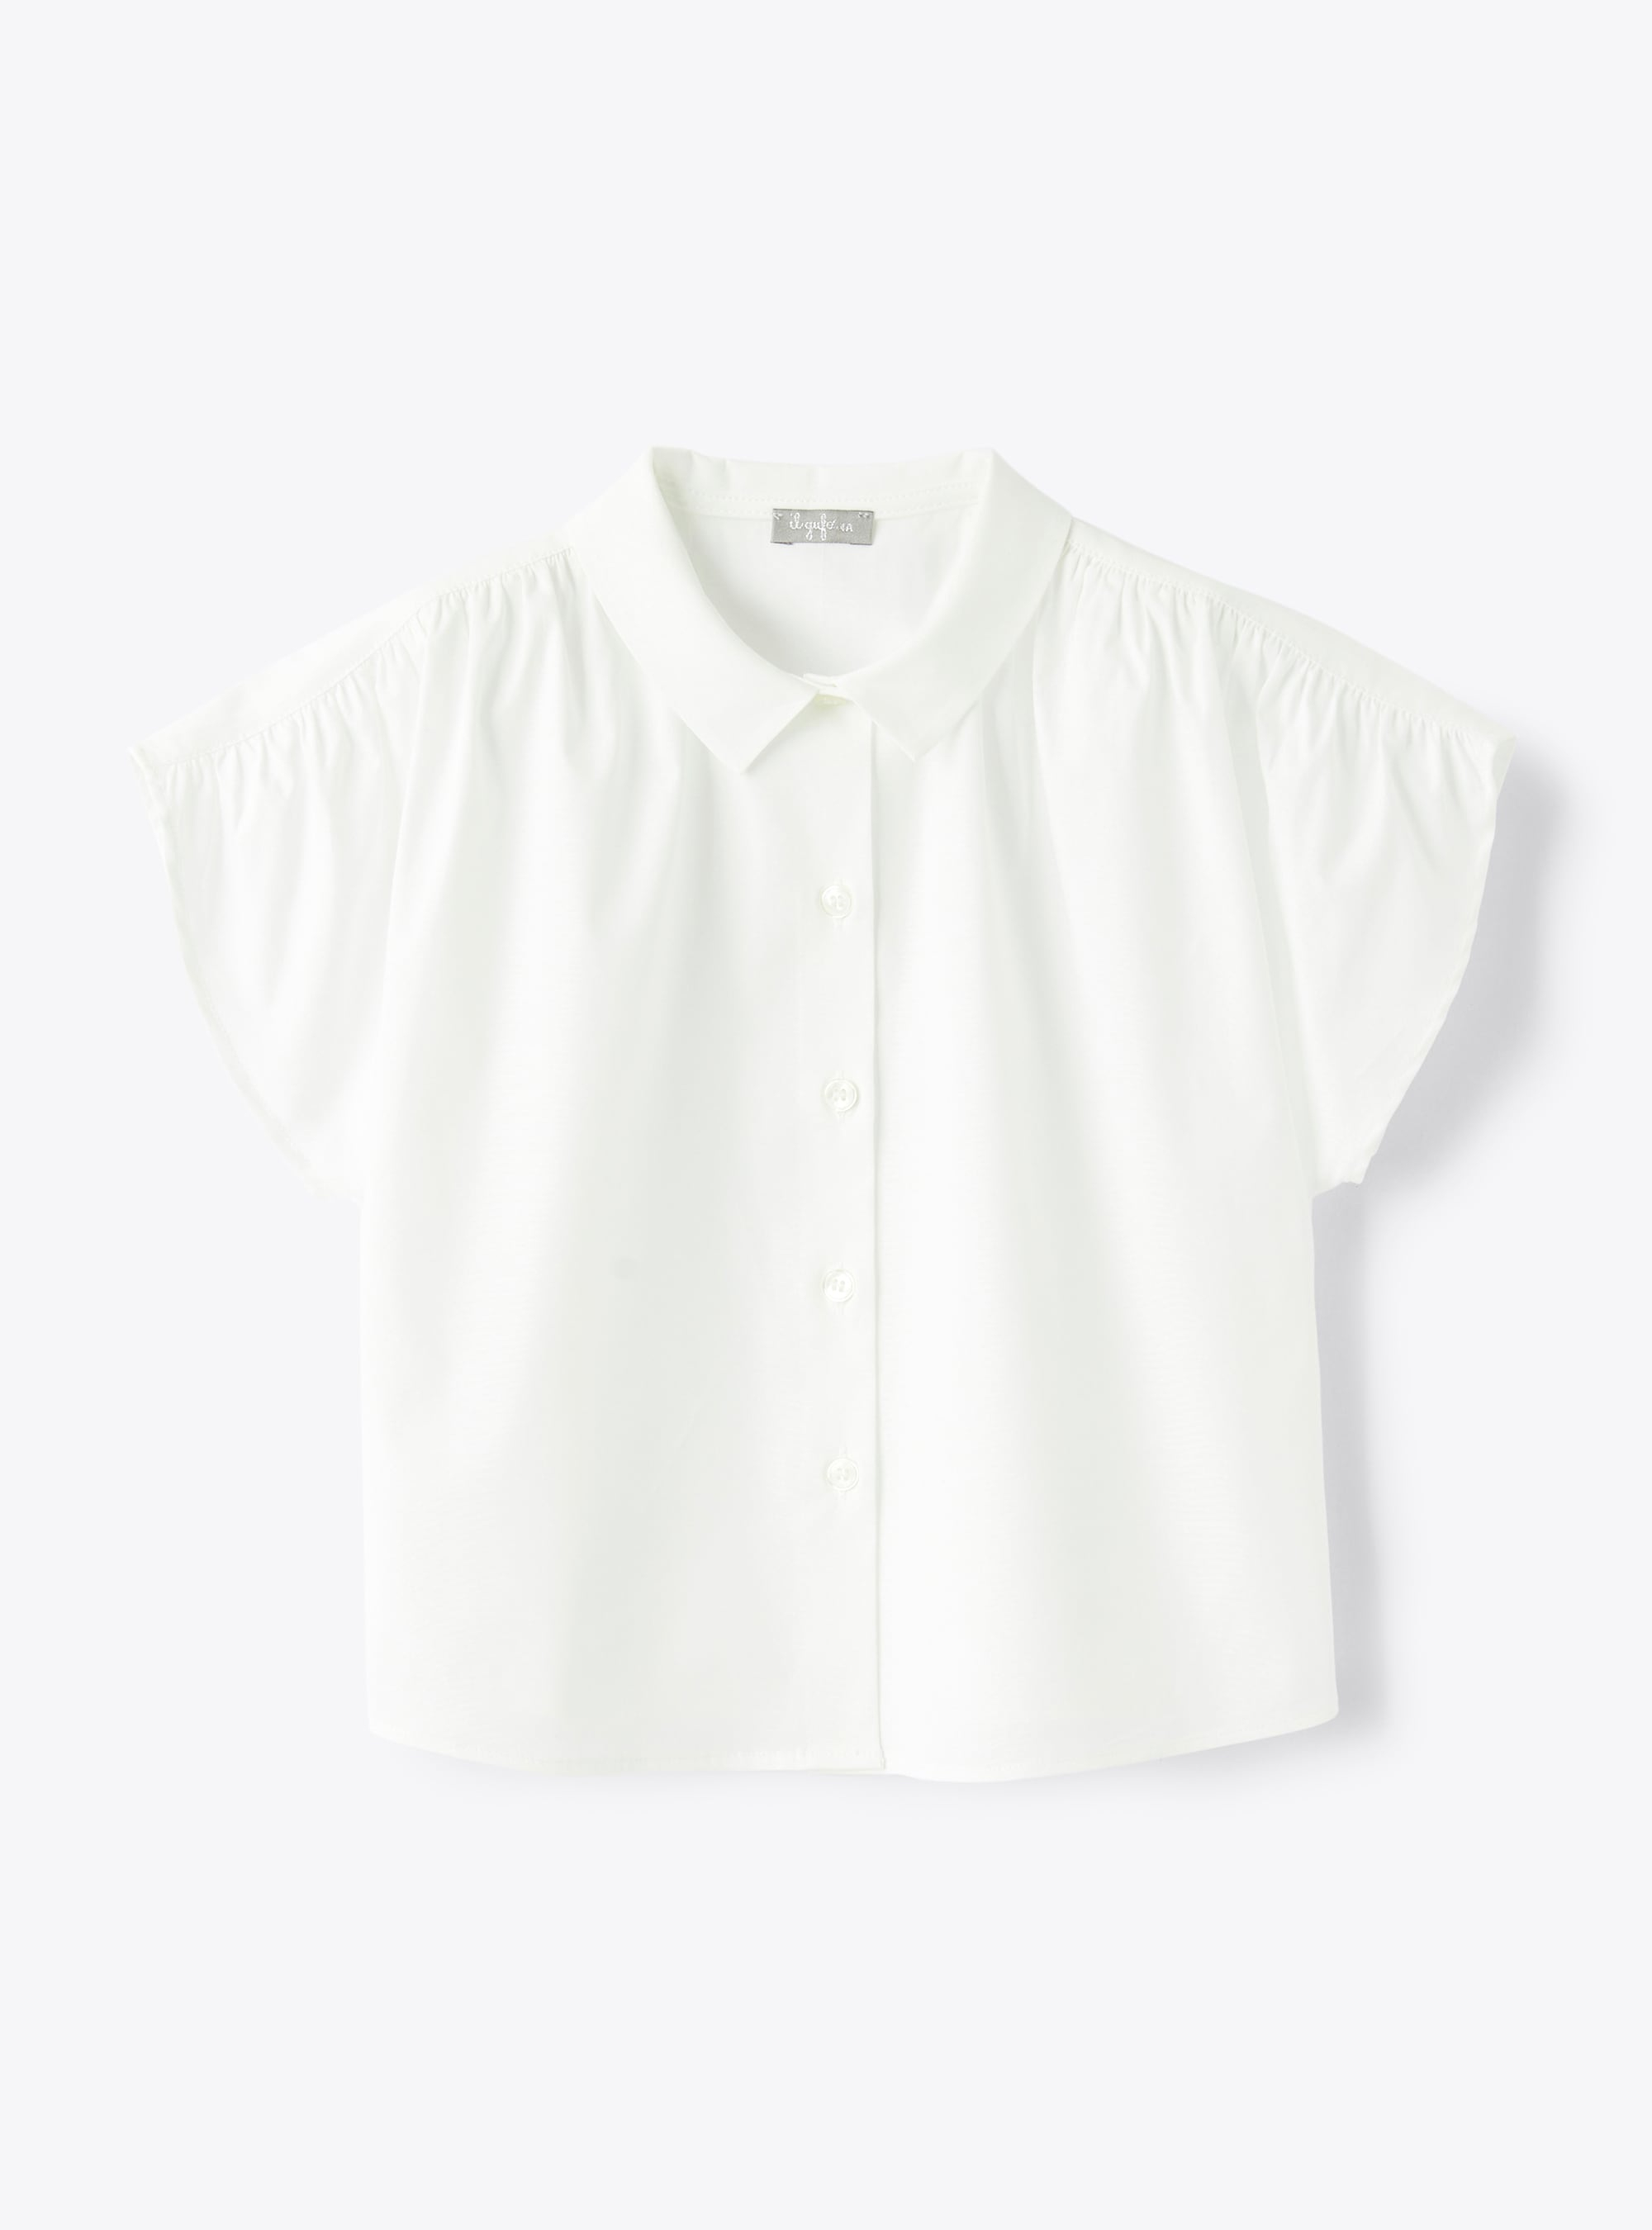 Bluse aus weißem Stretch-Popeline - Weiss | Il Gufo